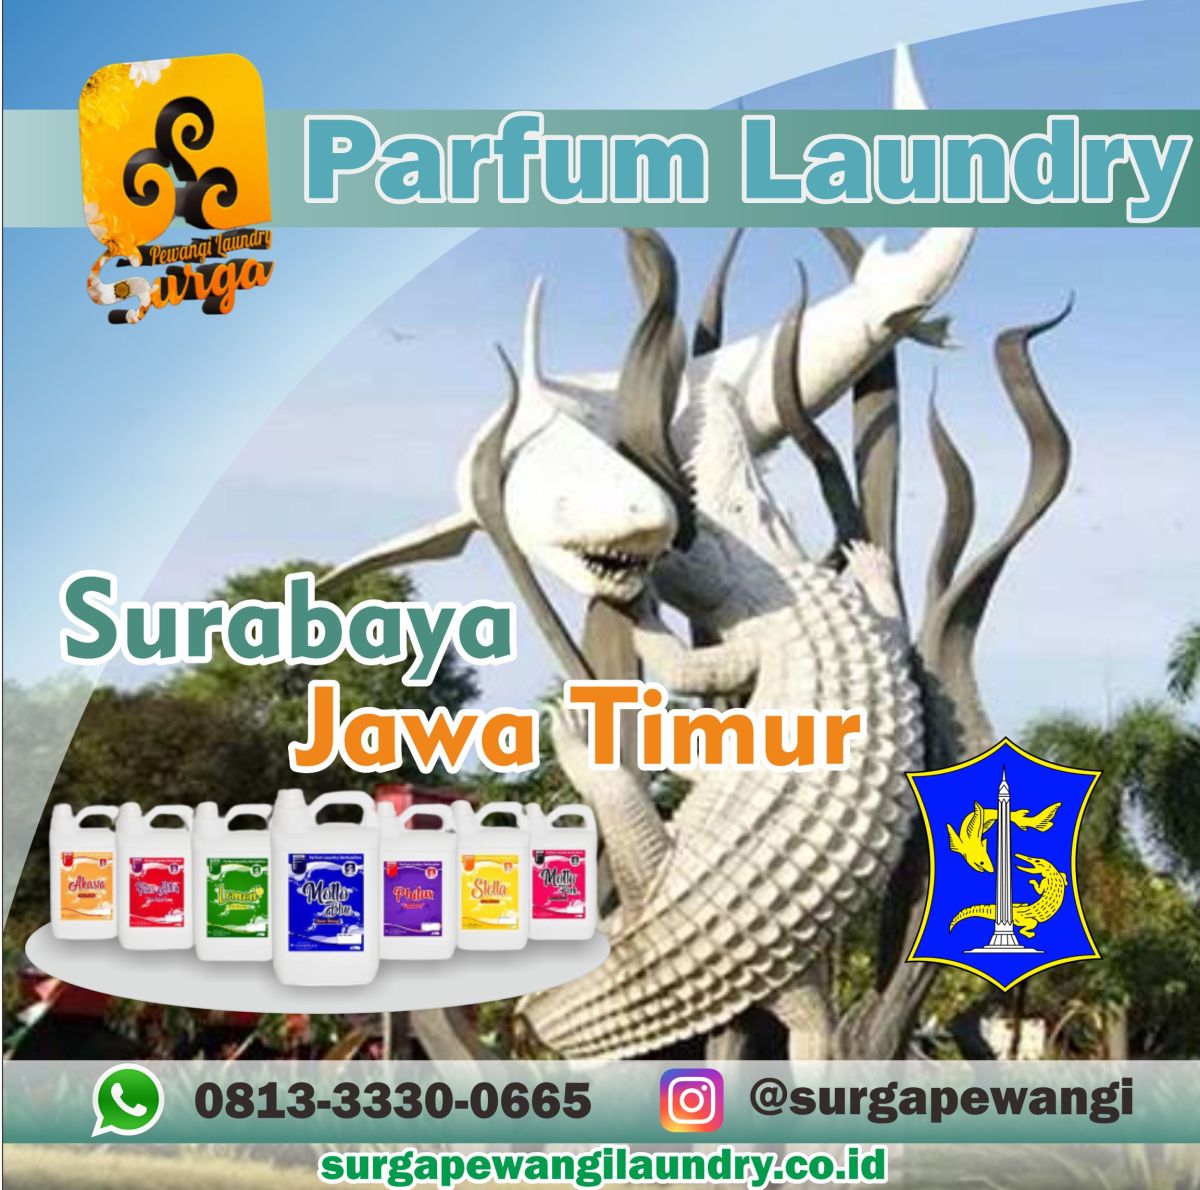 Parfum Laundry Kota Surabaya, Jawa Timur